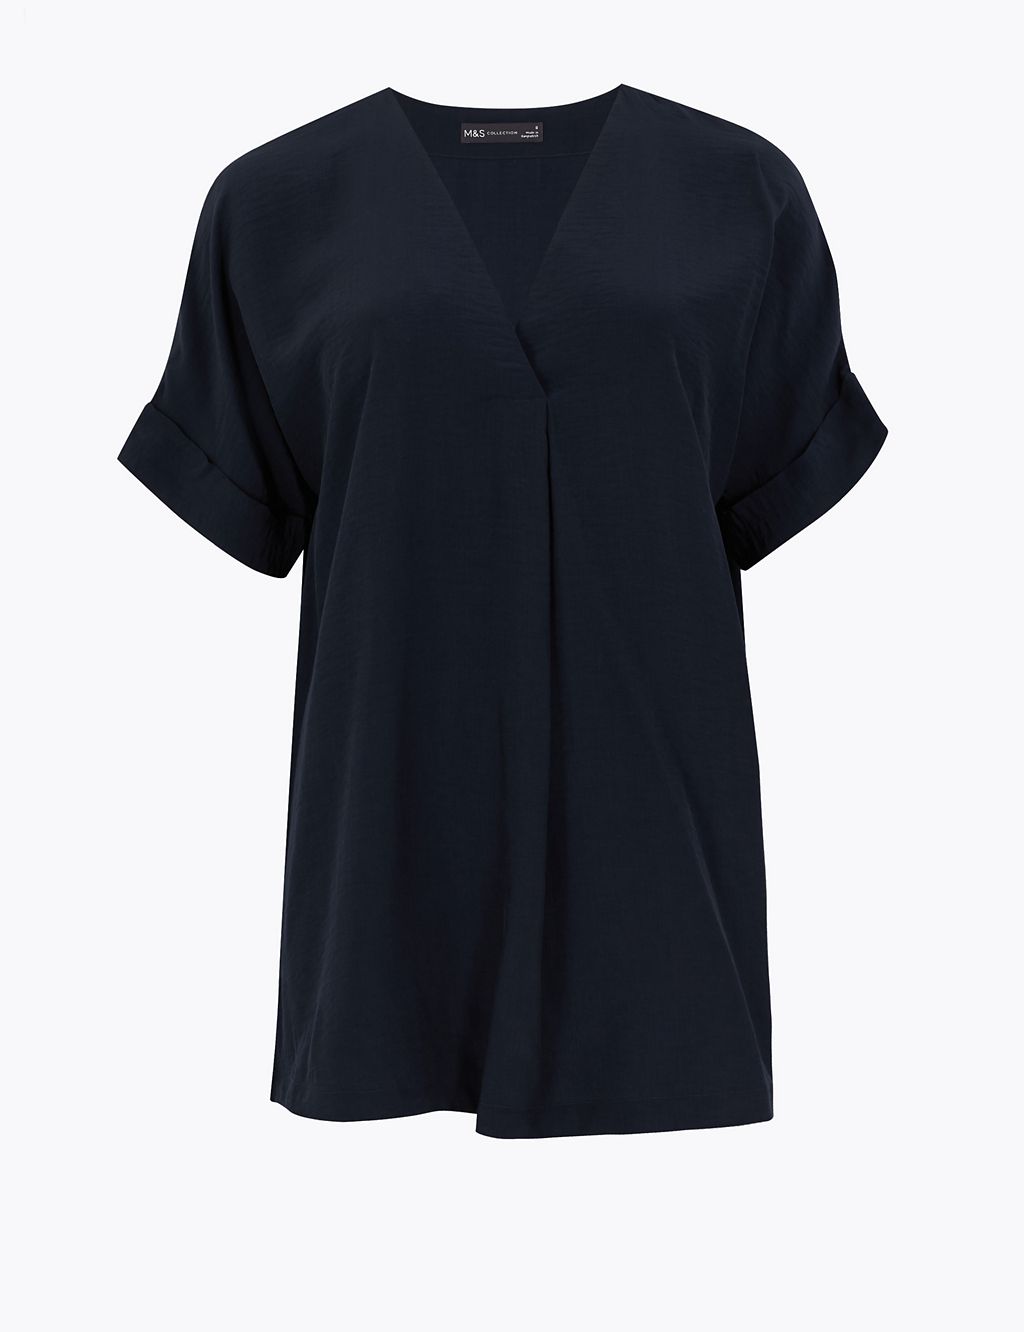 V-Neck Longline Short Sleeve Popover Blouse | M&S Collection | M&S